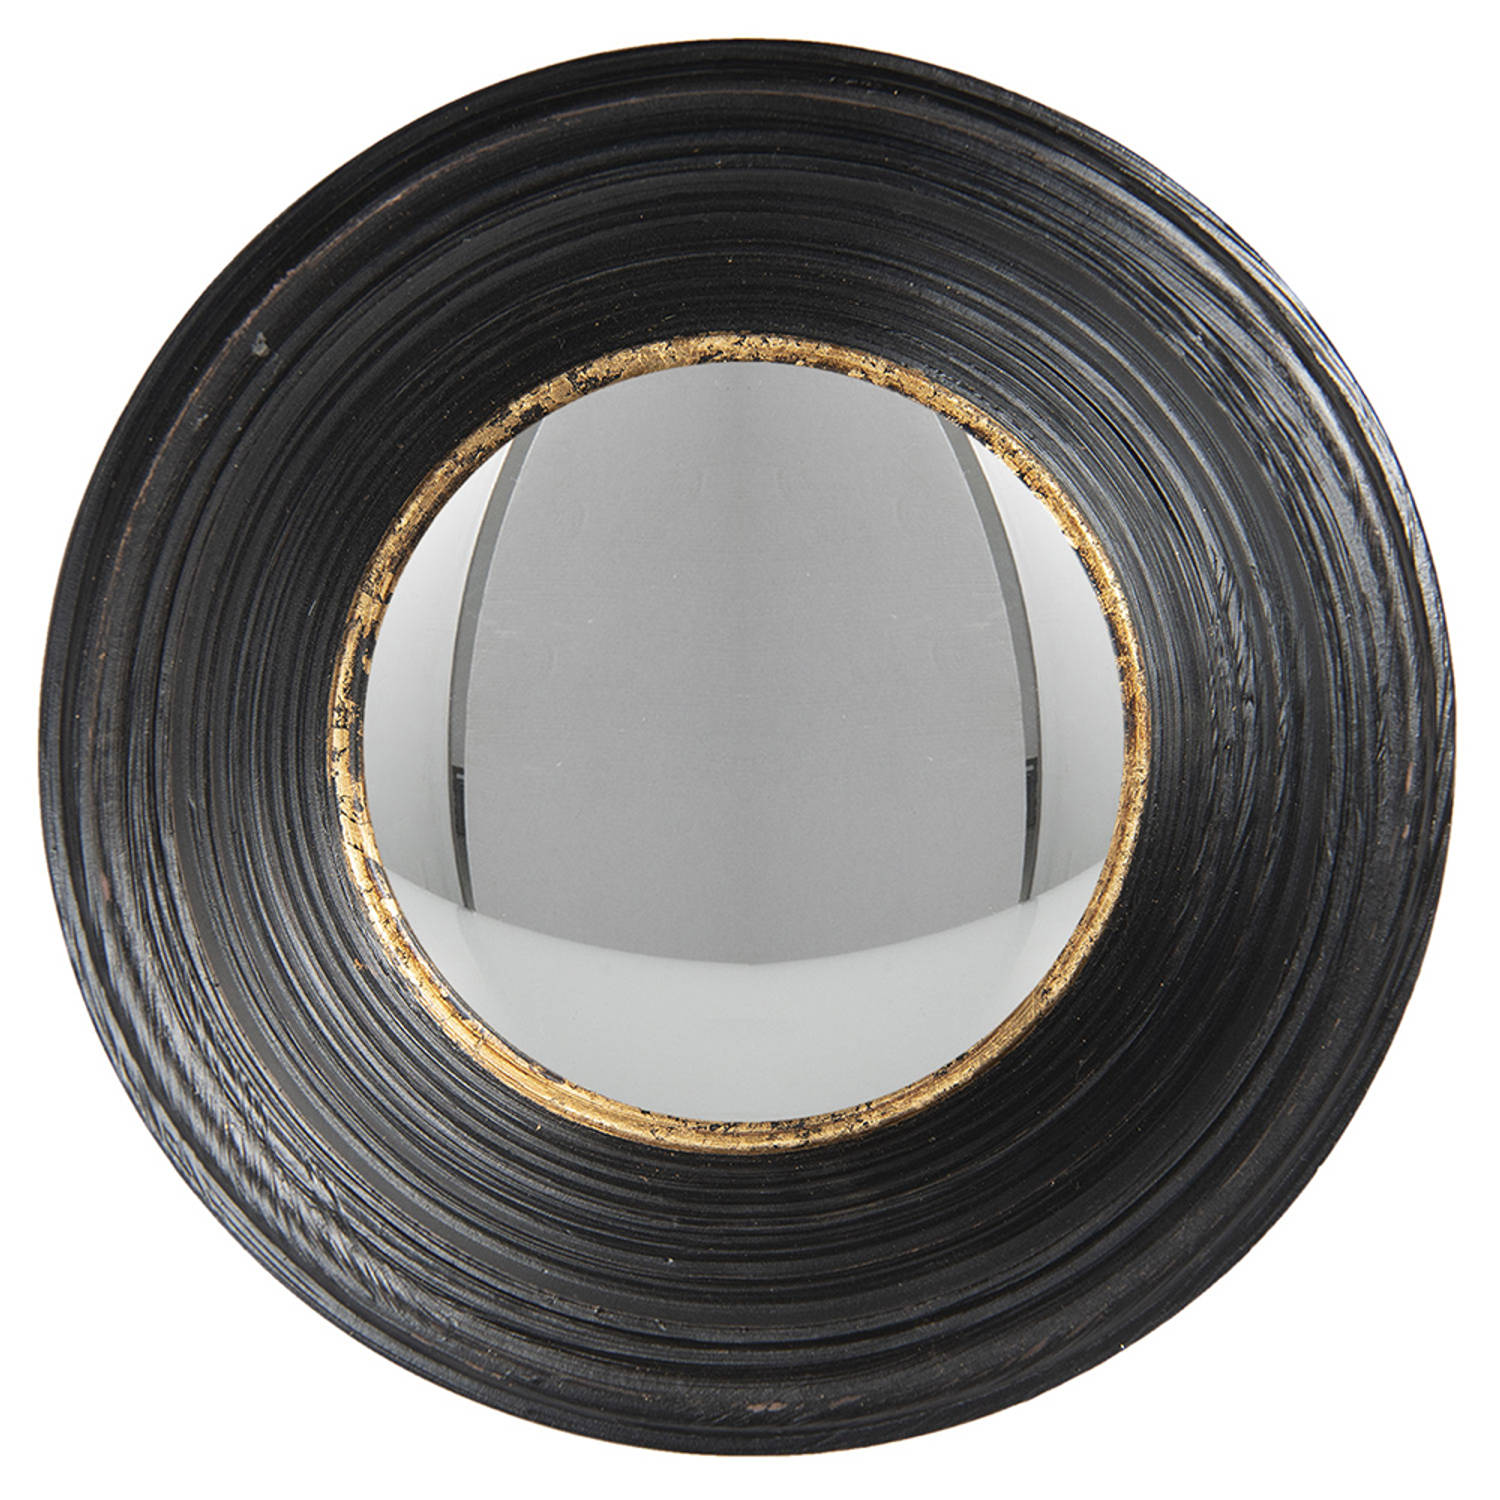 HAES DECO - Bolle ronde Spiegel - Kleur Zwart - Formaat Ø 24x7 cm - Materiaal Kunststof - Wandspiegel, Spiegel rond, Convex Glas